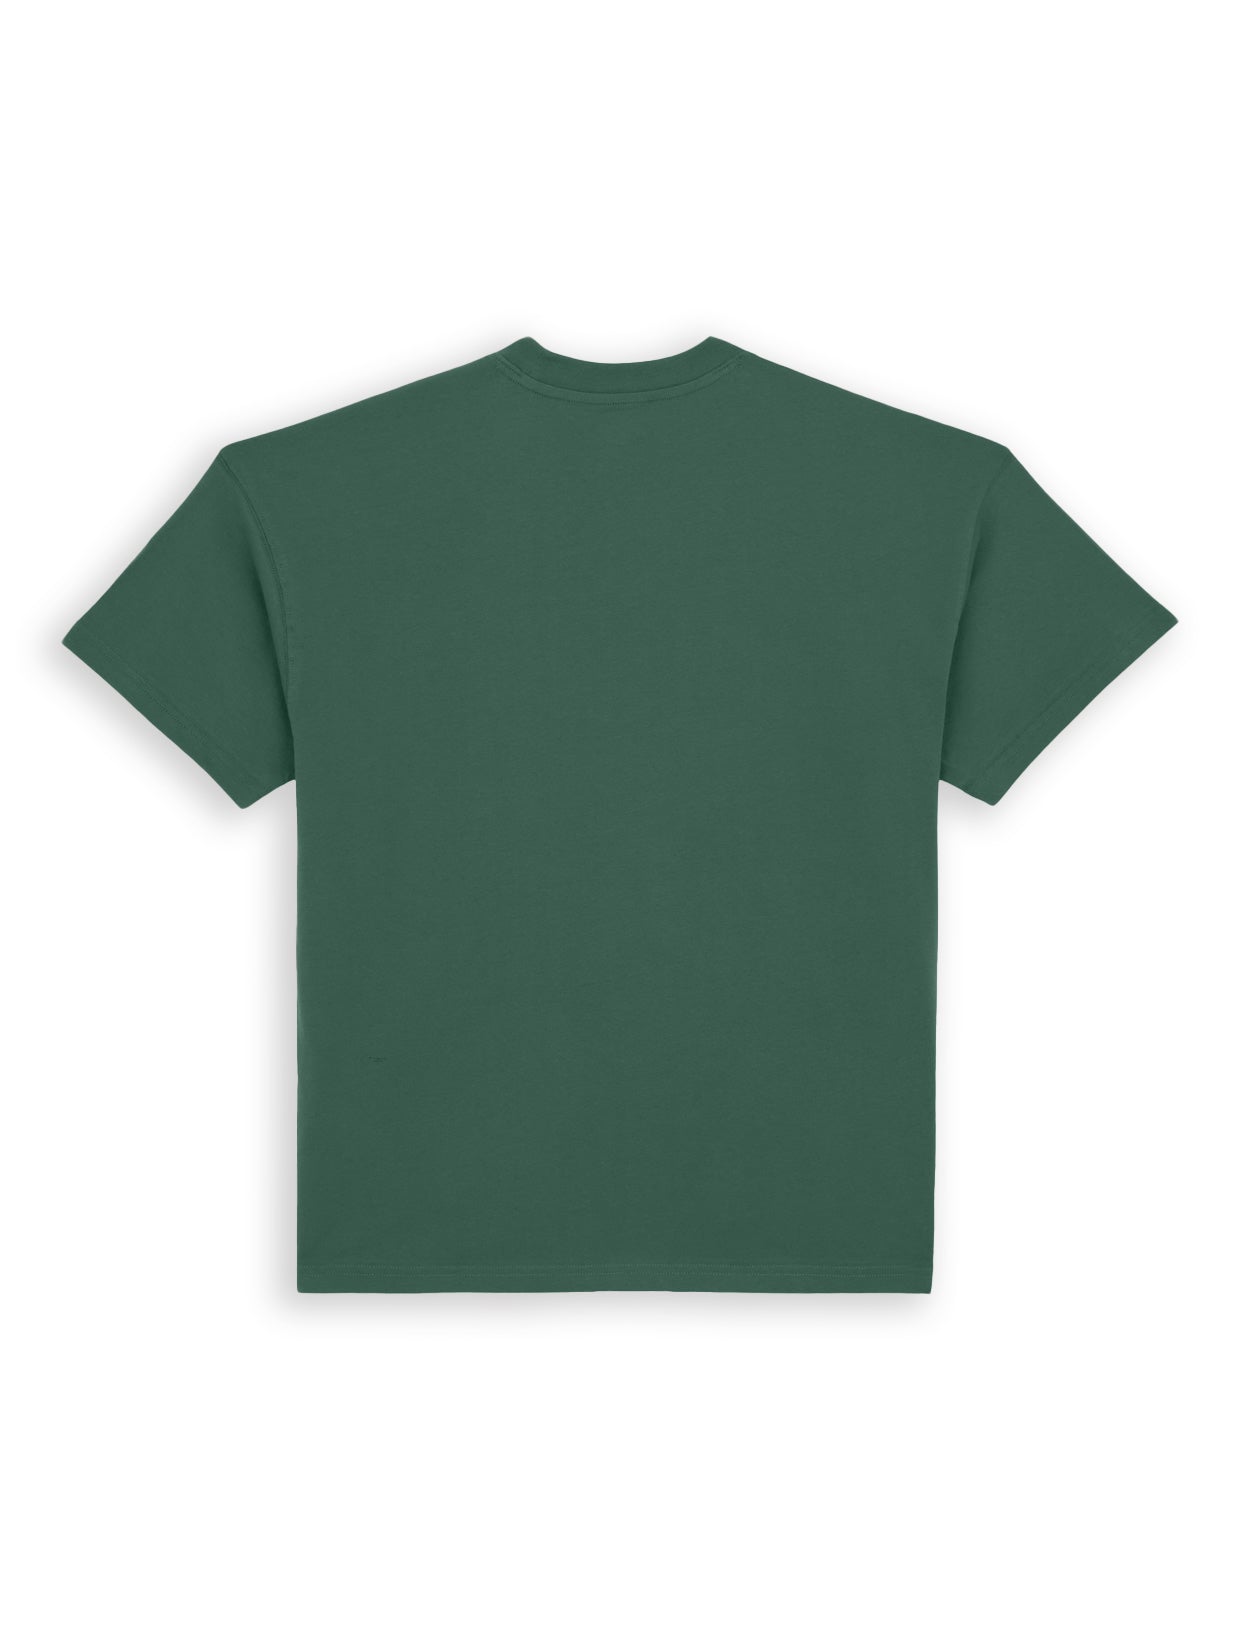 T-Shirt Dickies Enterprise Verde Foresta